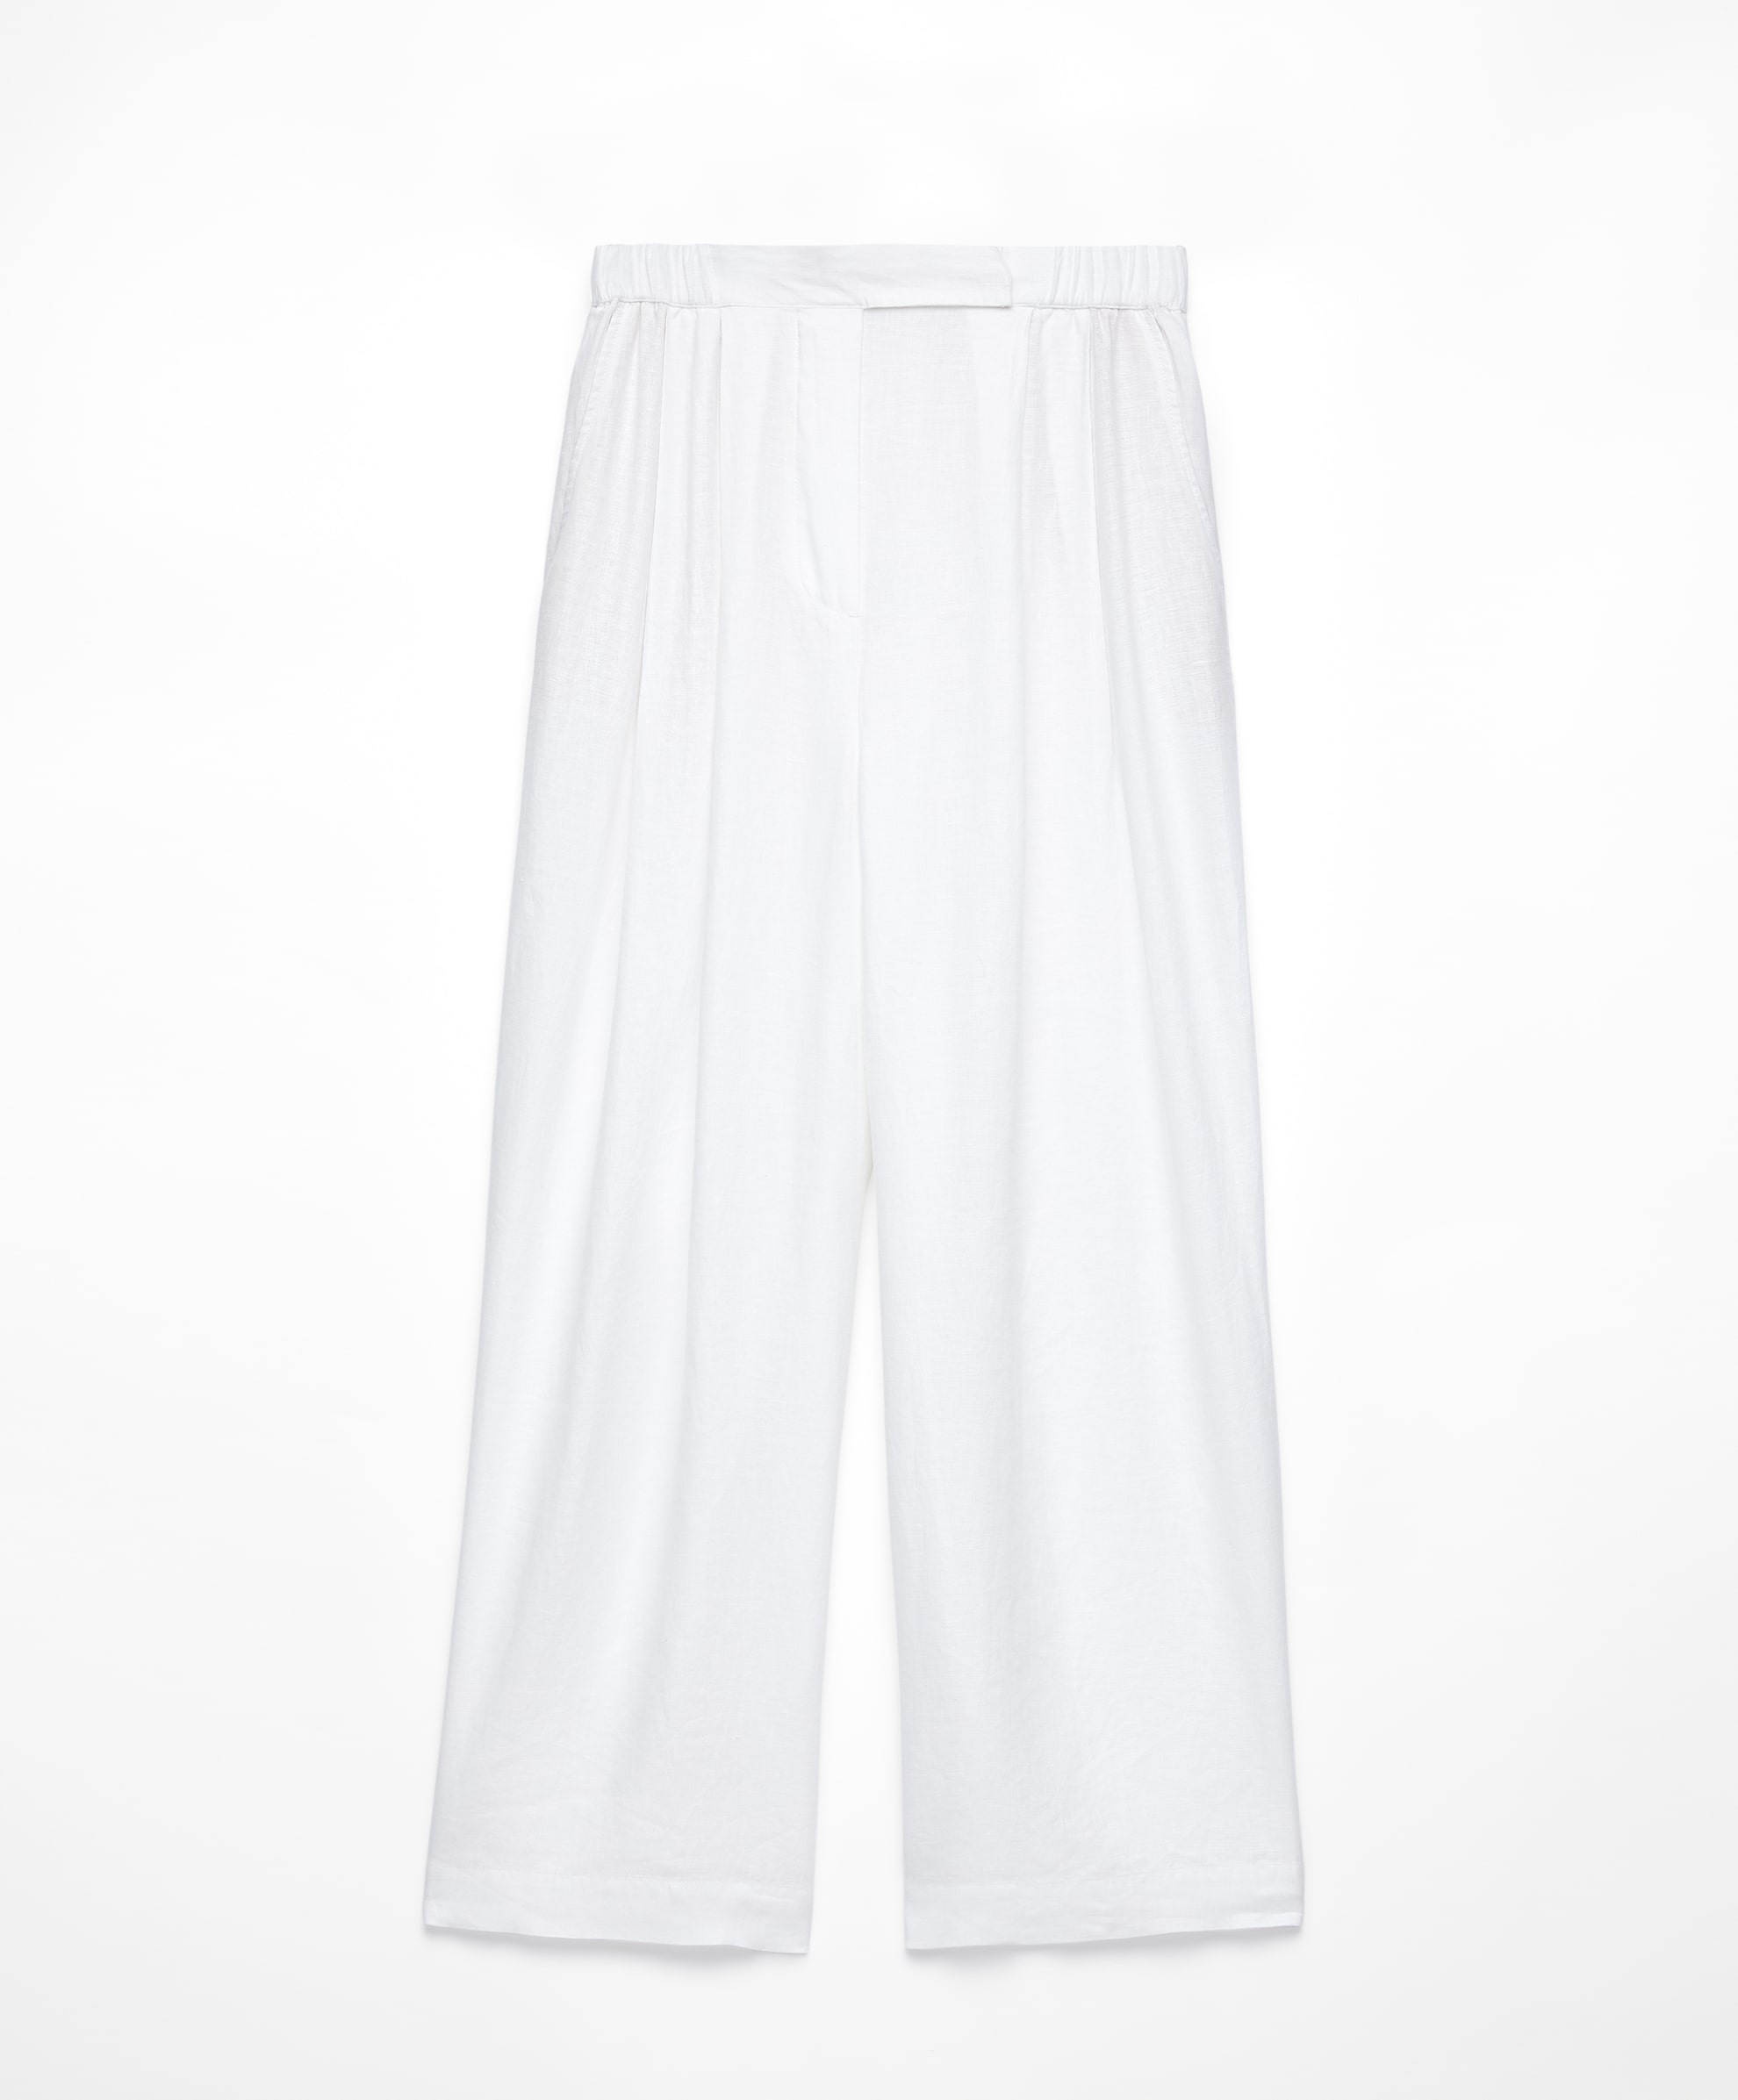 Брюки Oysho Tailored-fit 100% Linen, белый брюки zara relaxed fit 100% linen белый